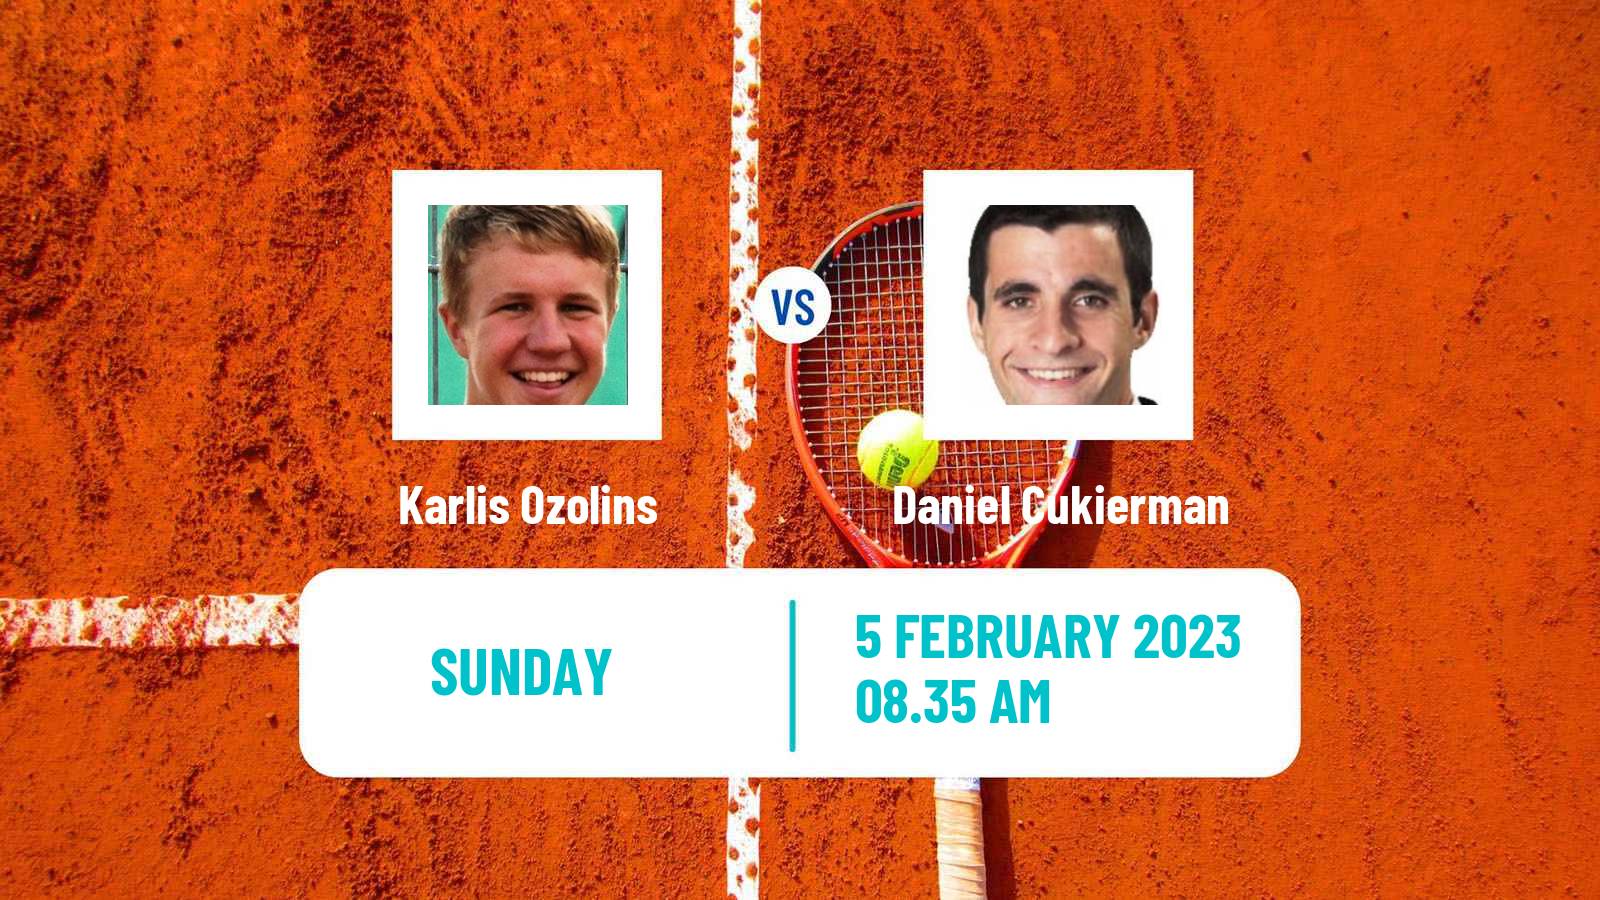 Tennis Davis Cup World Group I Karlis Ozolins - Daniel Cukierman